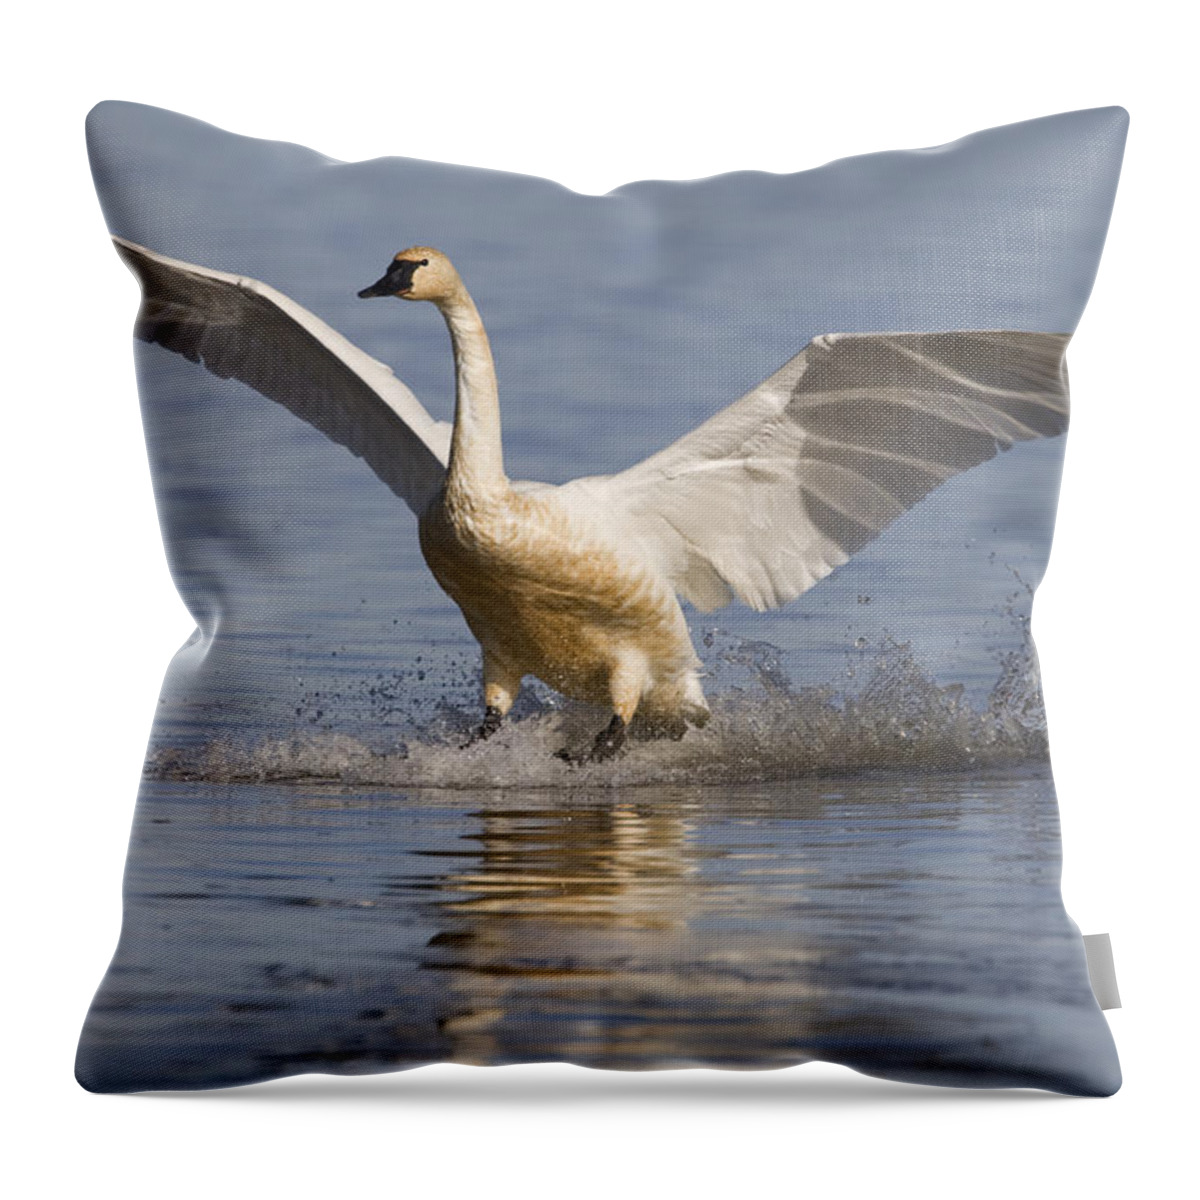 00429830 Throw Pillow featuring the photograph Tundra Swan Landing Tule Lake National by Sebastian Kennerknecht